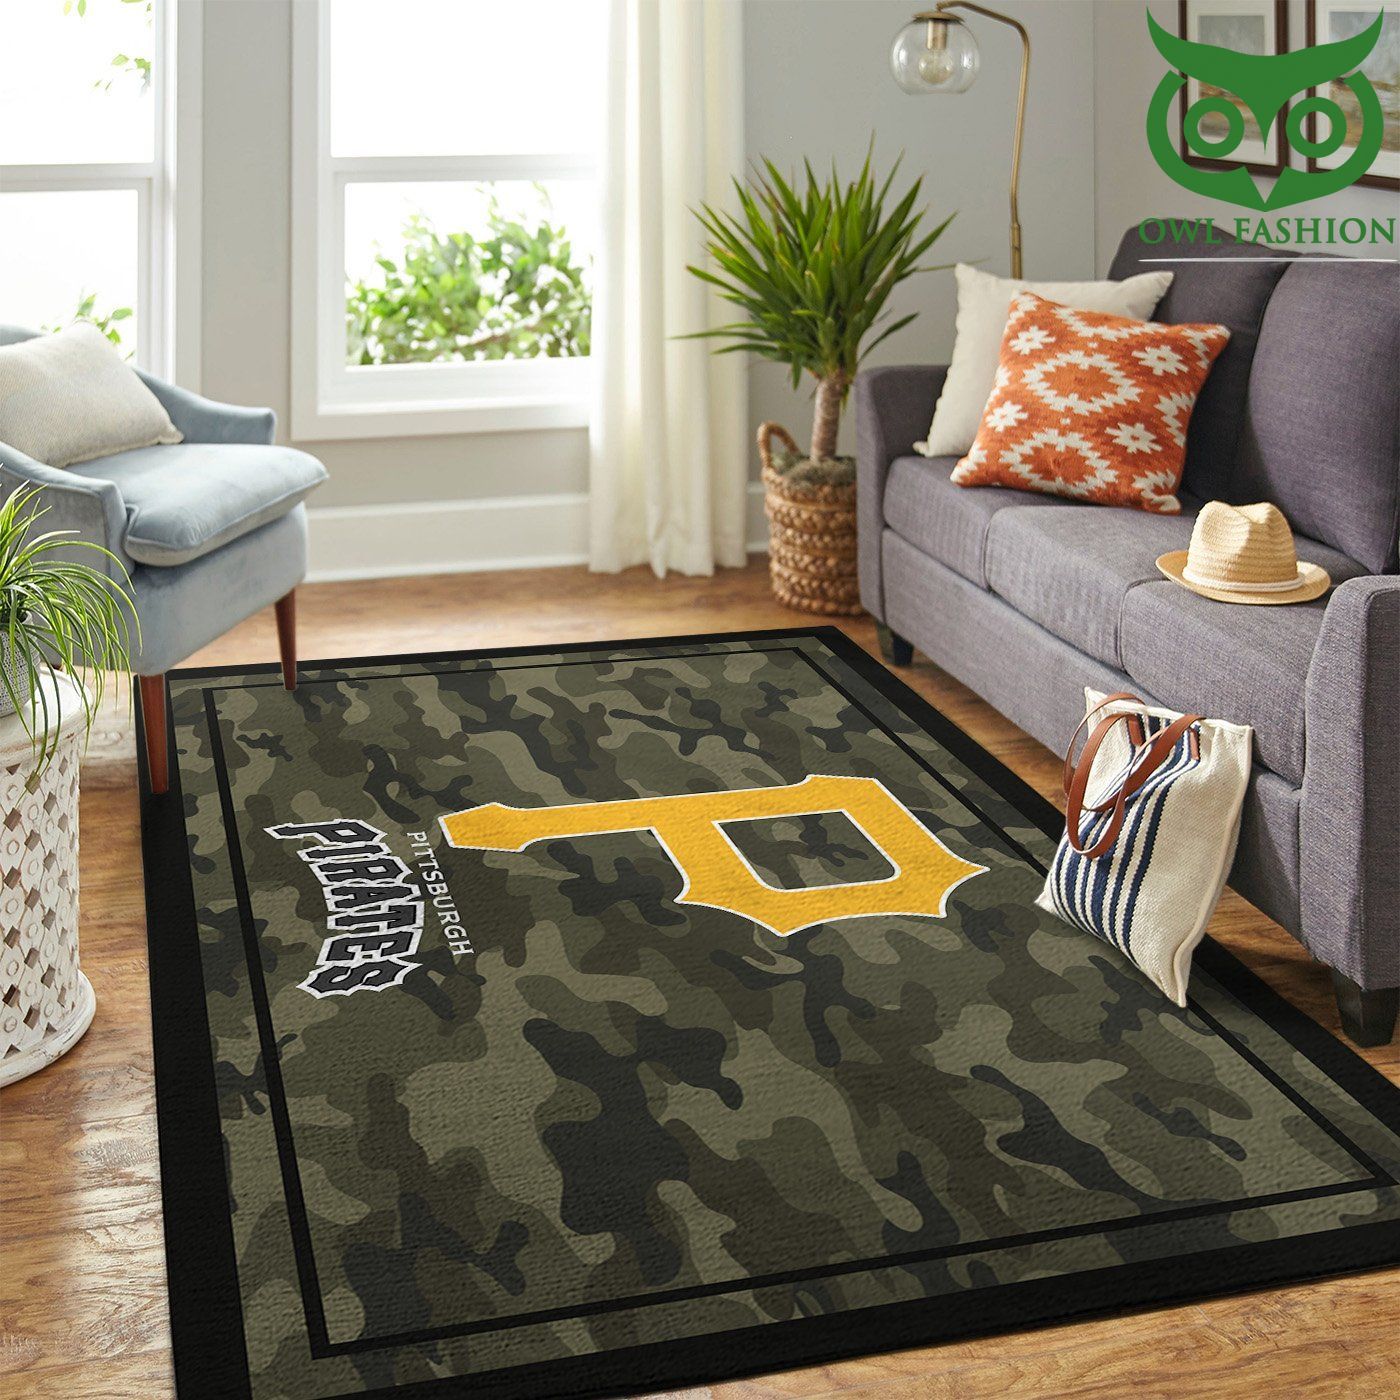 Pittsburgh Pirates Mlb Team Logo Camo Style carpet rug limited edition